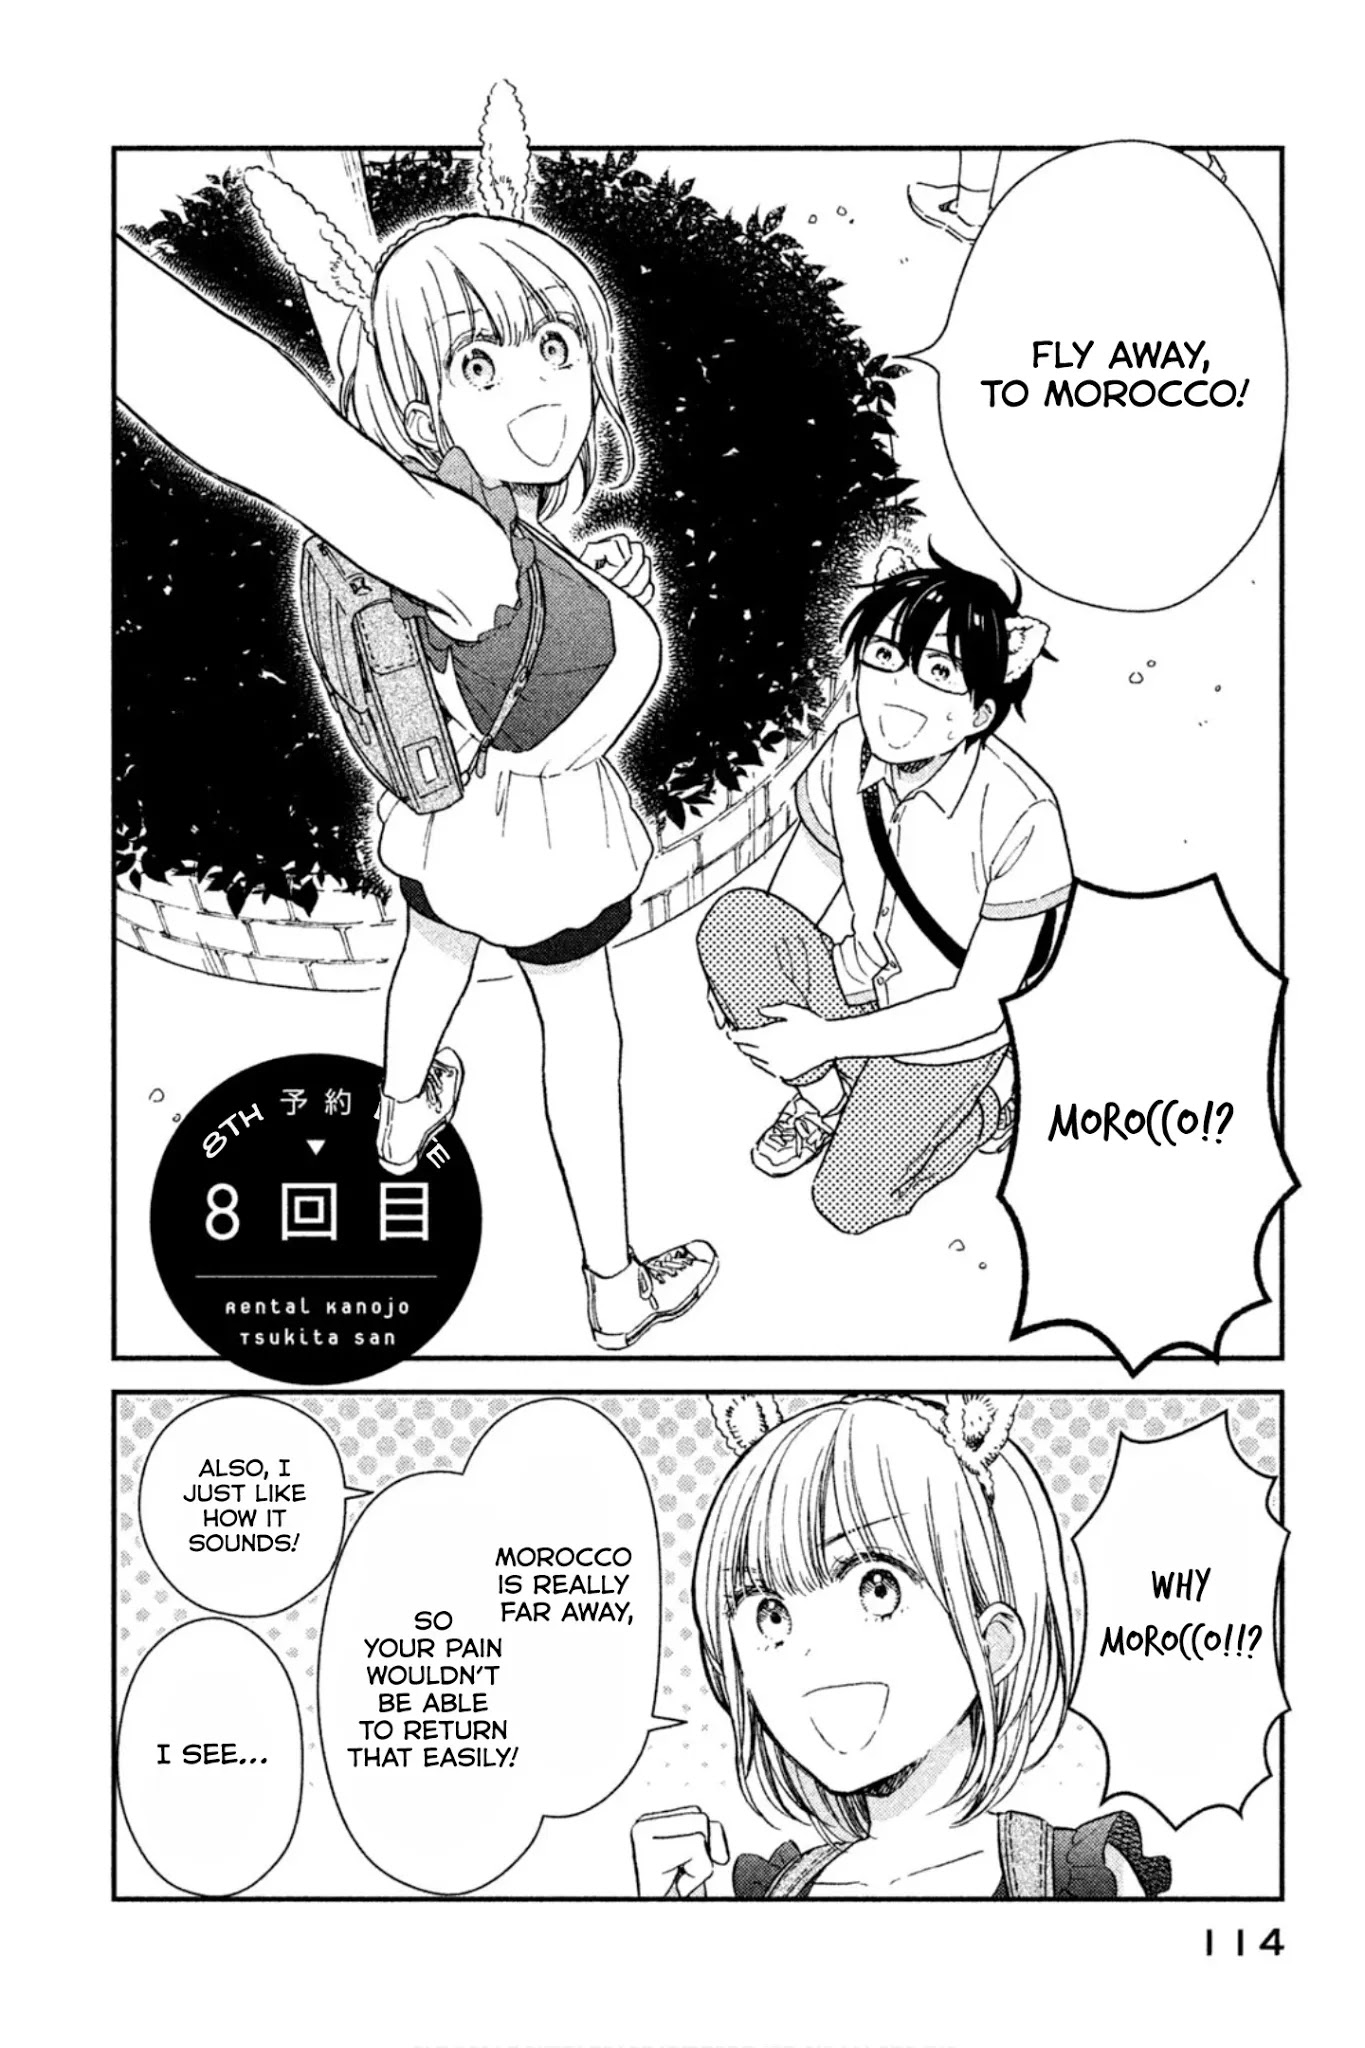 Rental Girlfriend Tsukita-San - Page 2